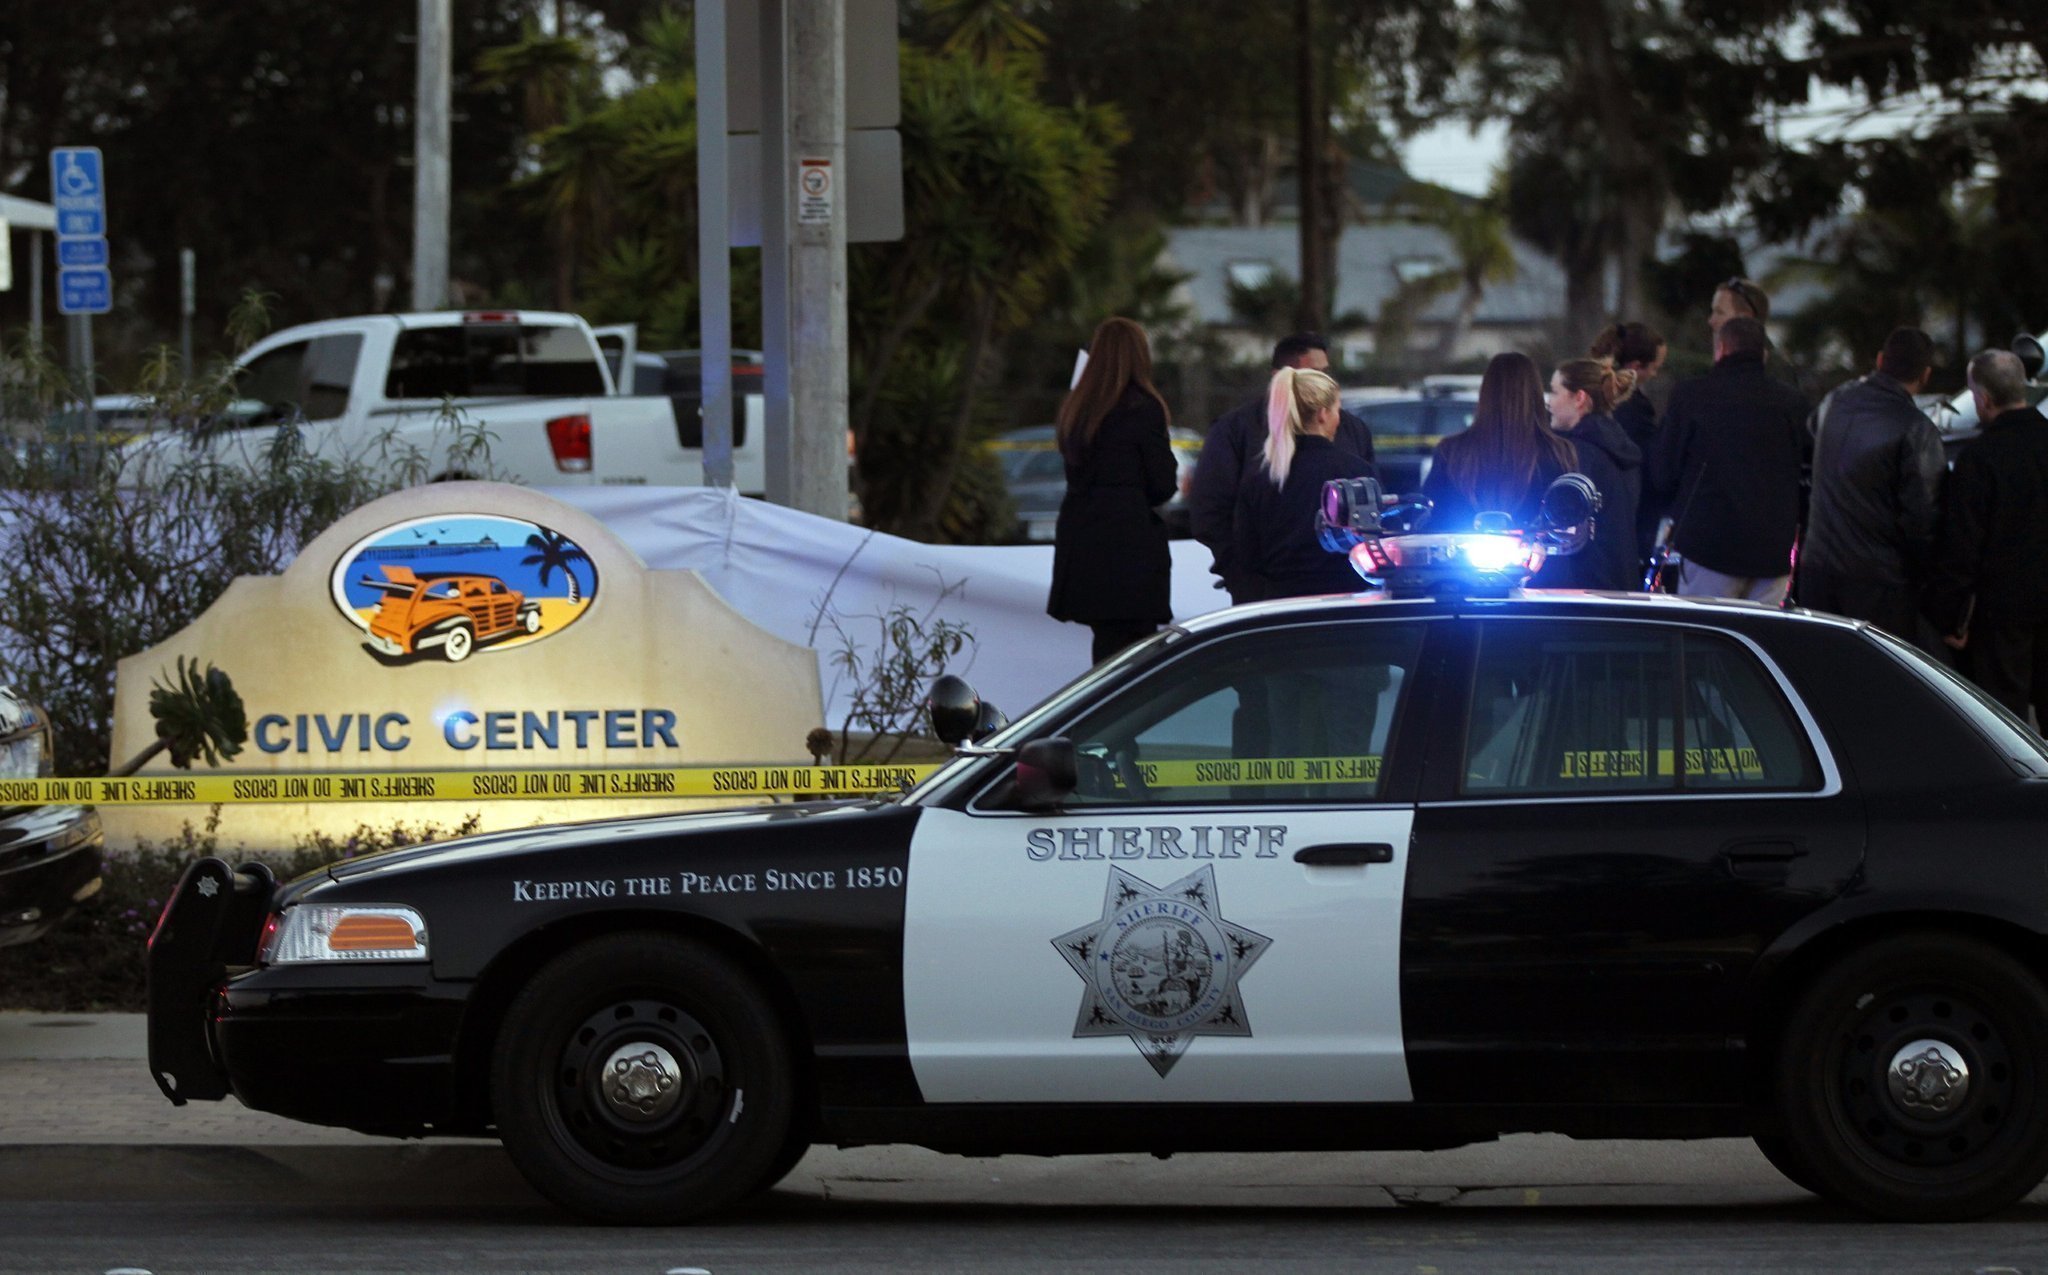 Sheriff's employee files retaliation claim - The San Diego Union-Tribune